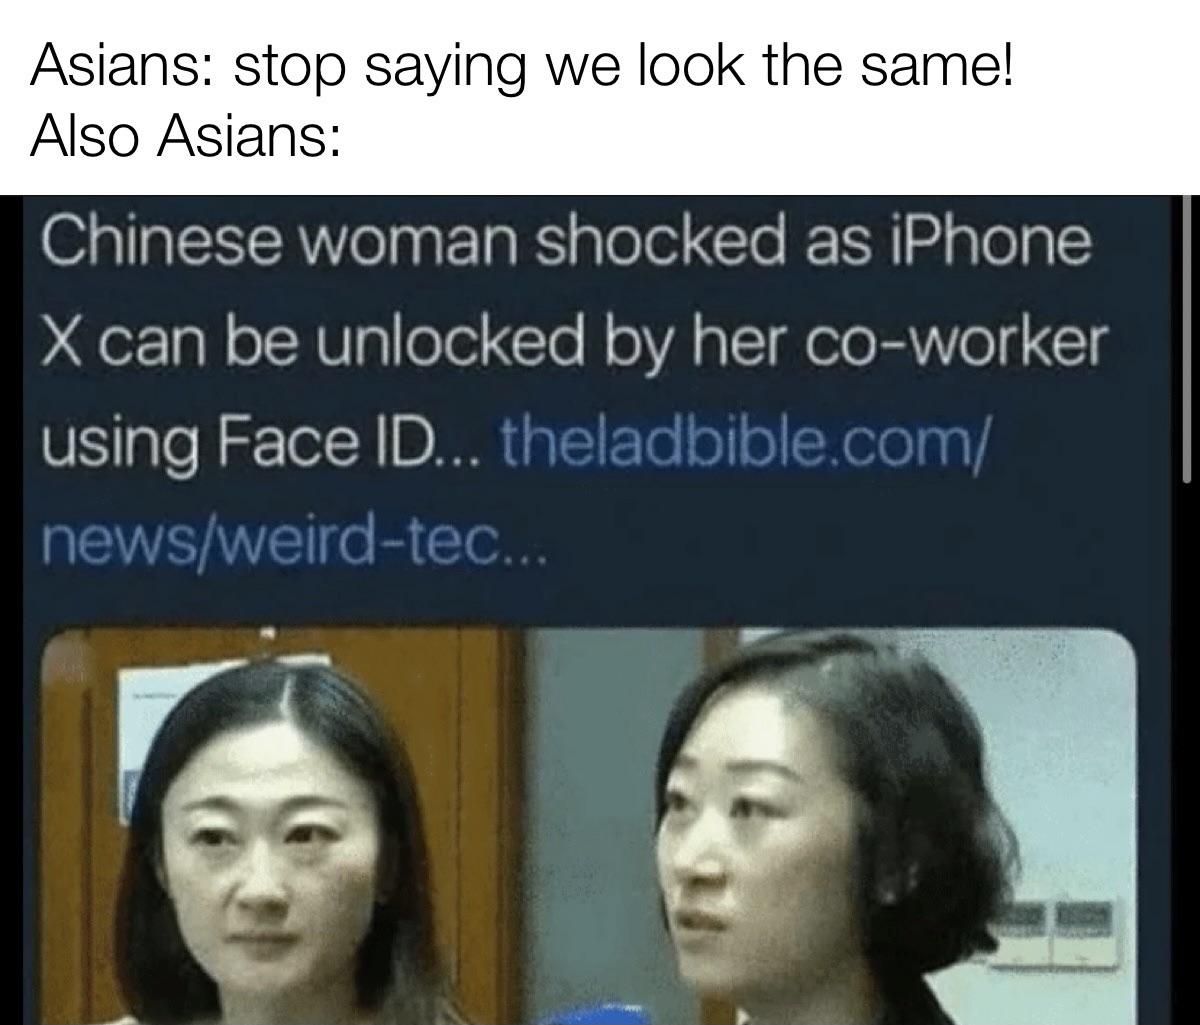 Disclaimer: I am also an Asian